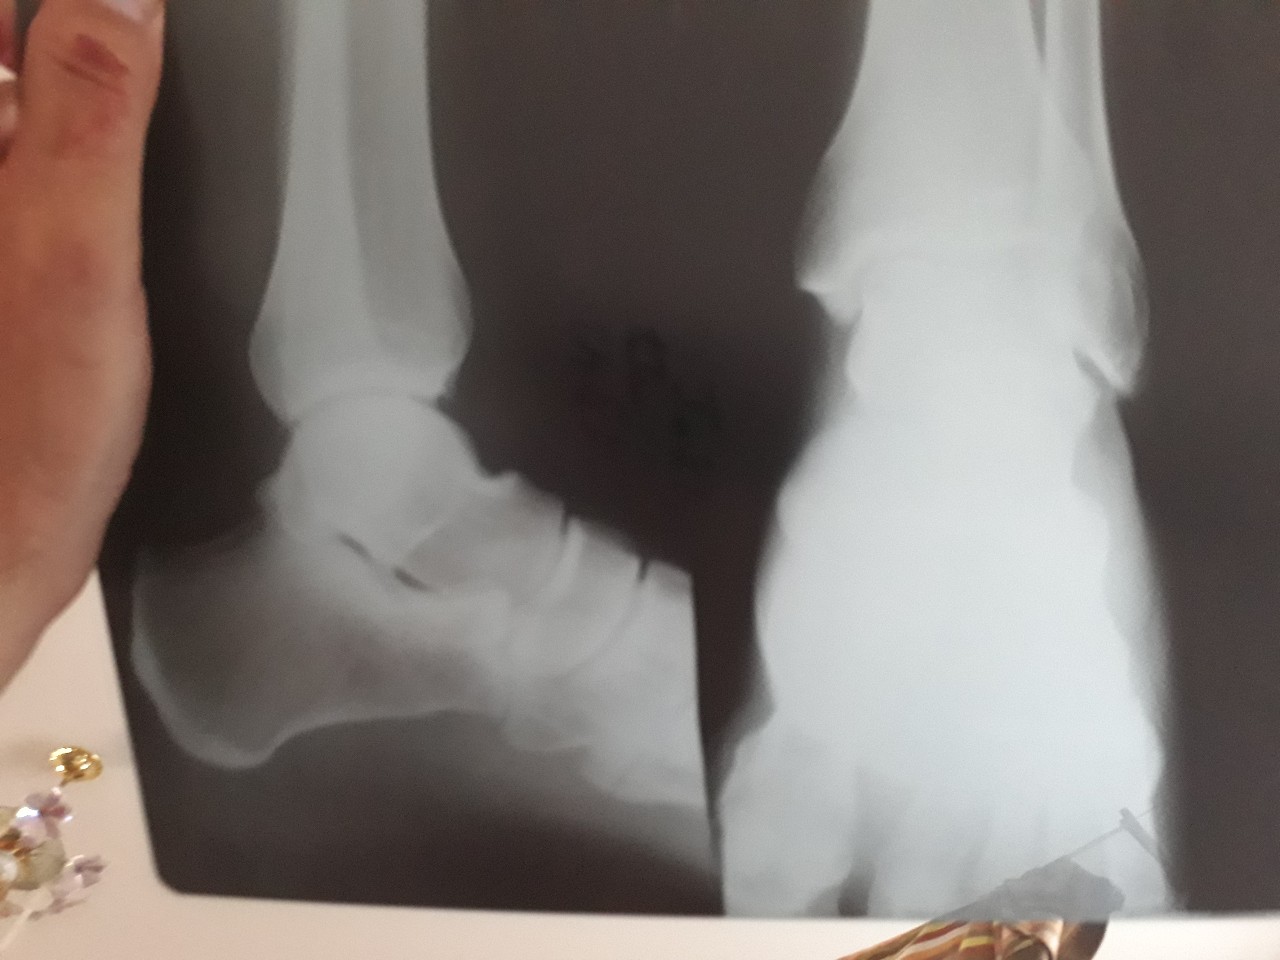 Трещина кости на ноге. Снимок перелома ноги рентгеновский. Снимок сломанной ноги рентген. Перелом ноги рентген снимки.